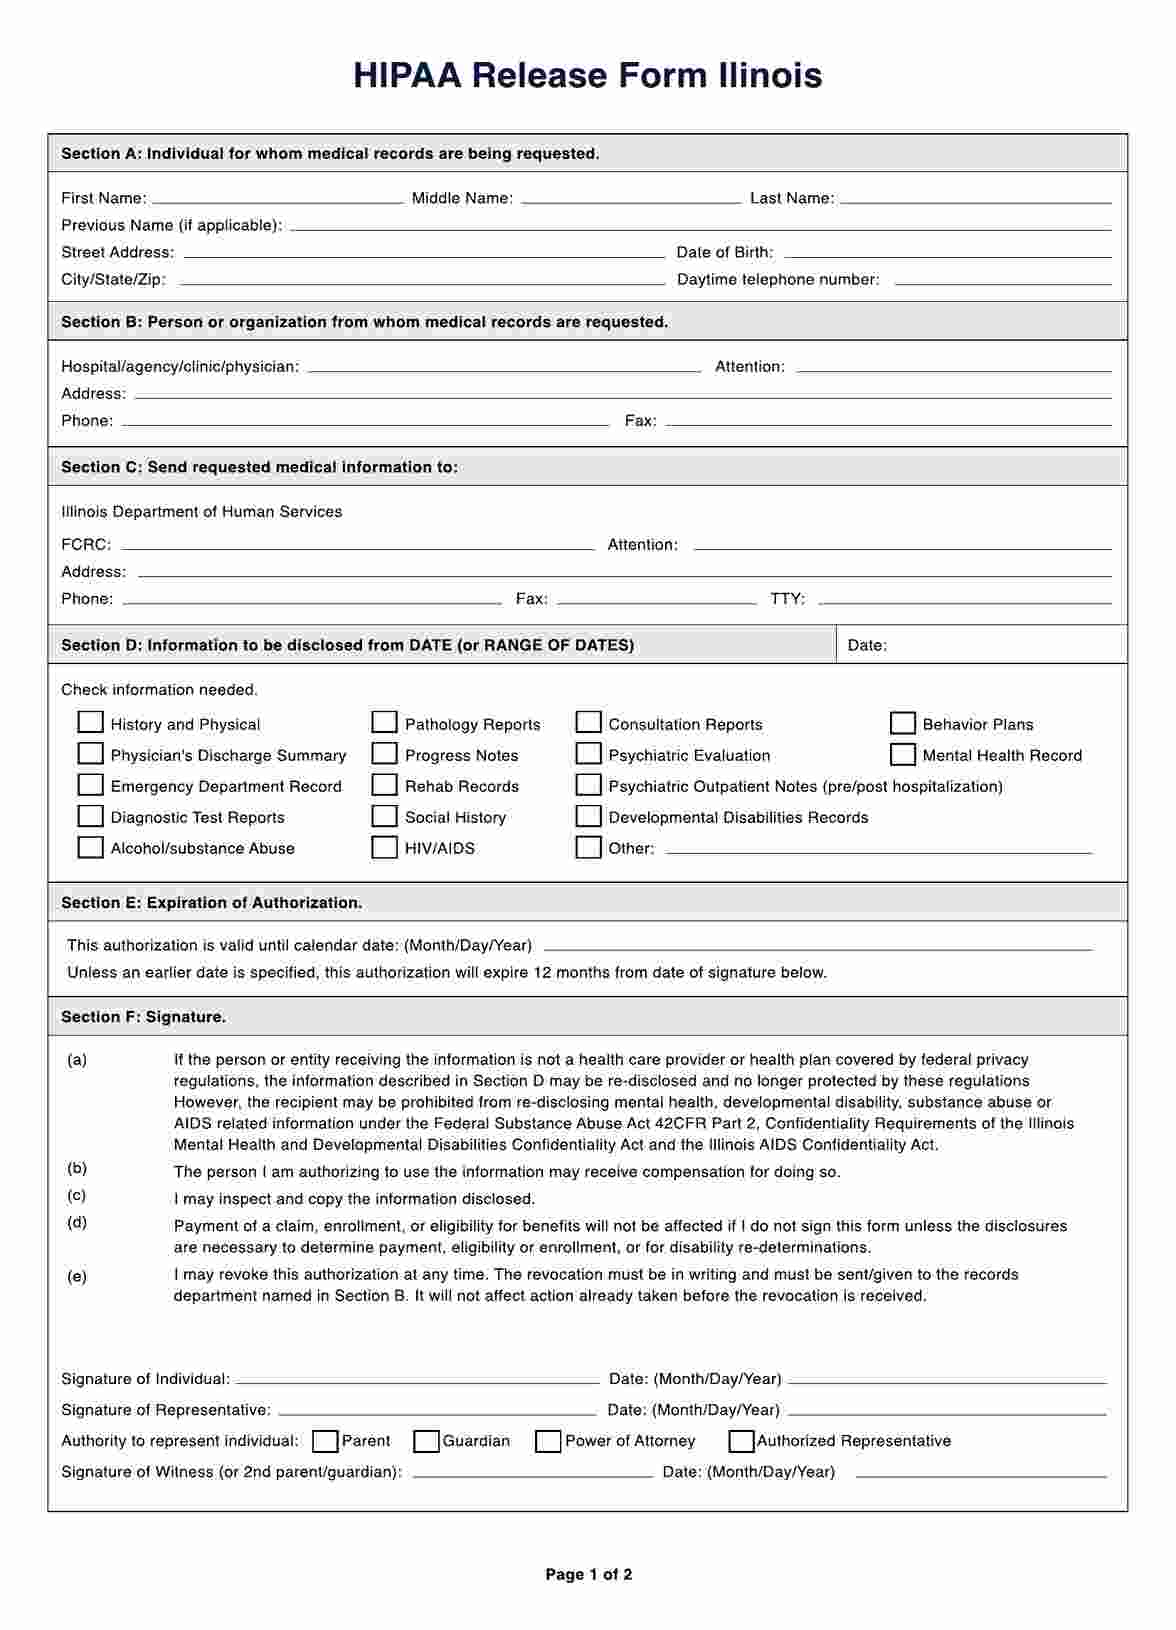 HIPAA Release Form Illinois PDF Example